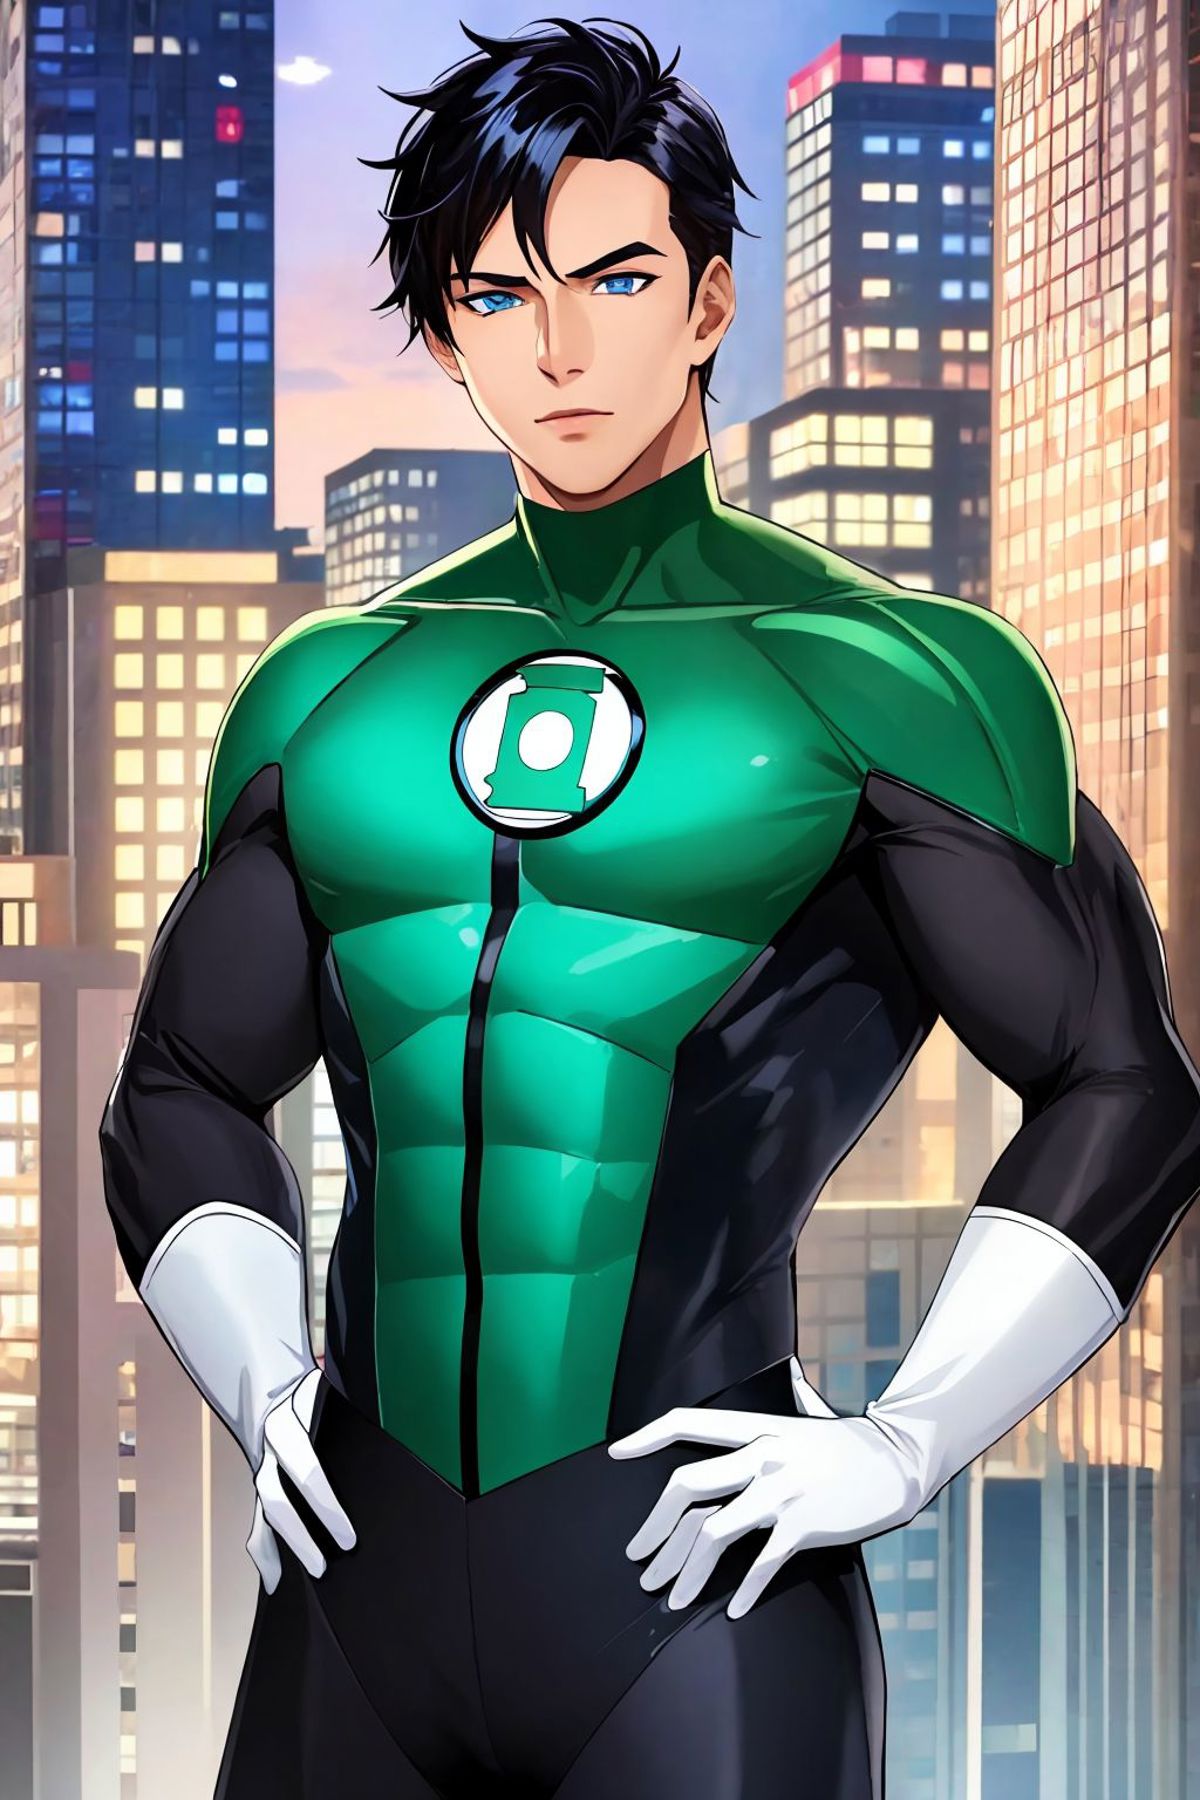 Green Lantern Costume image by Montitto